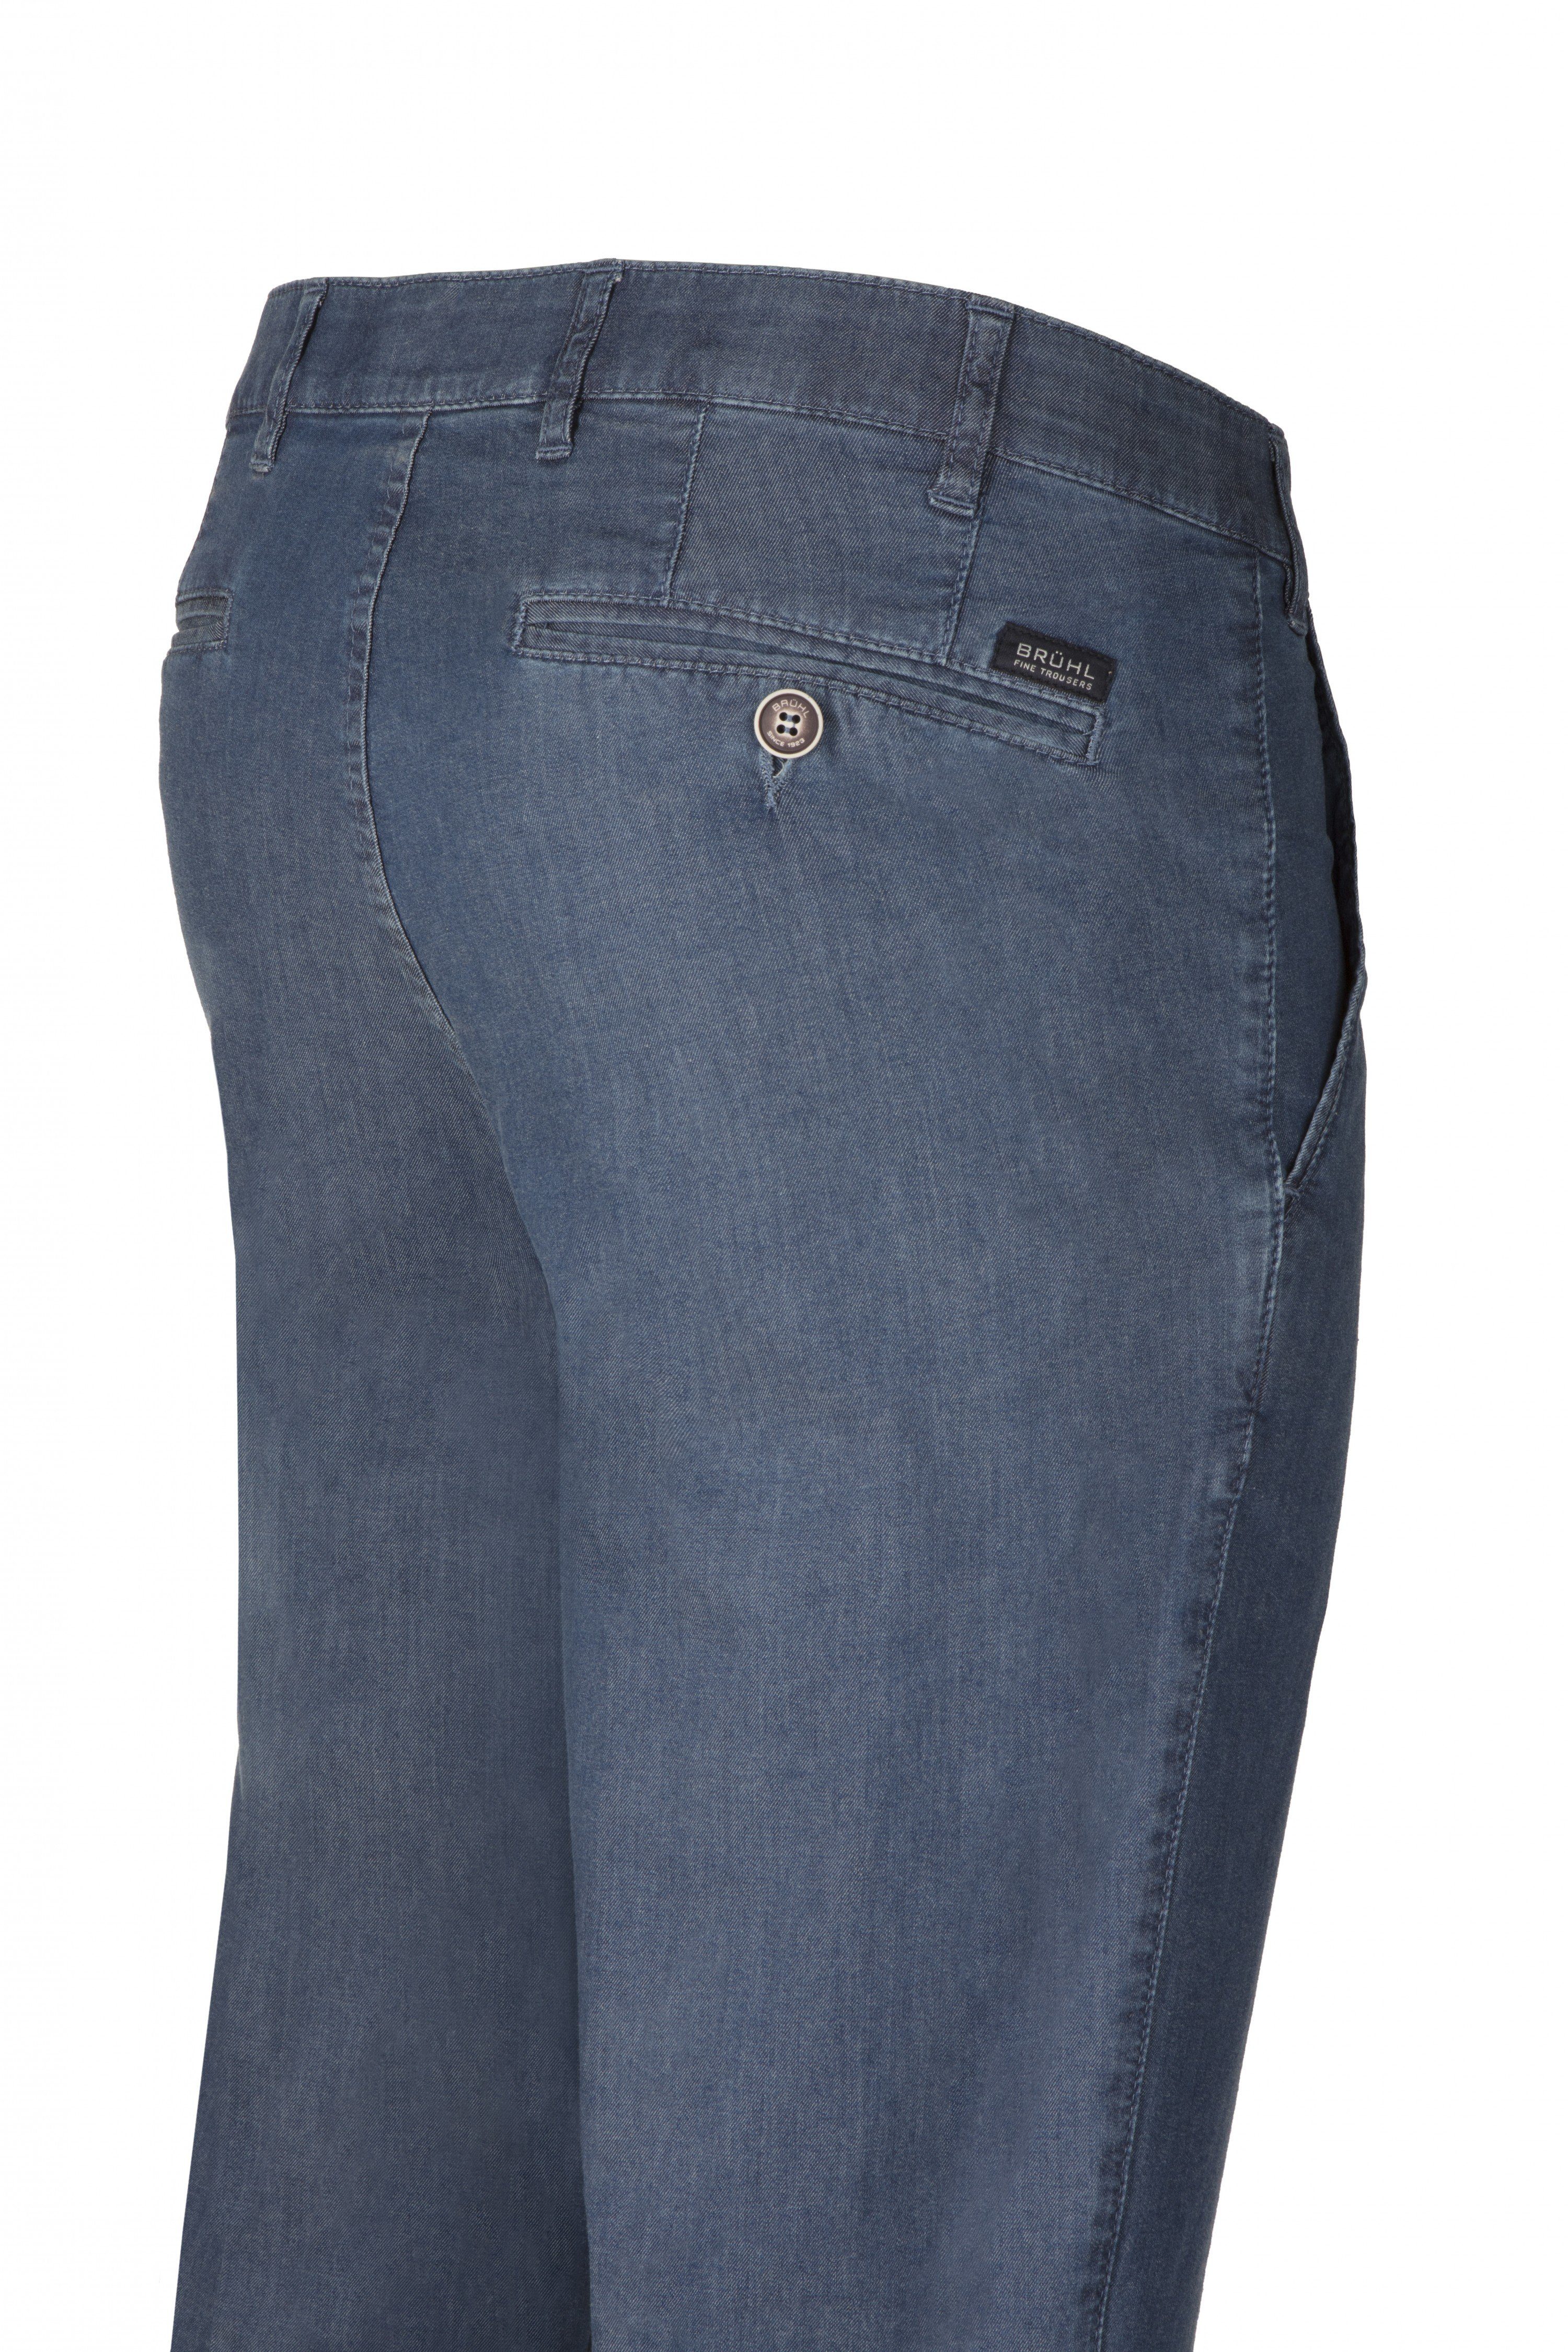 in blau Jeans High-Stretch Parma Bequeme Denim ultraleichtem Brühl